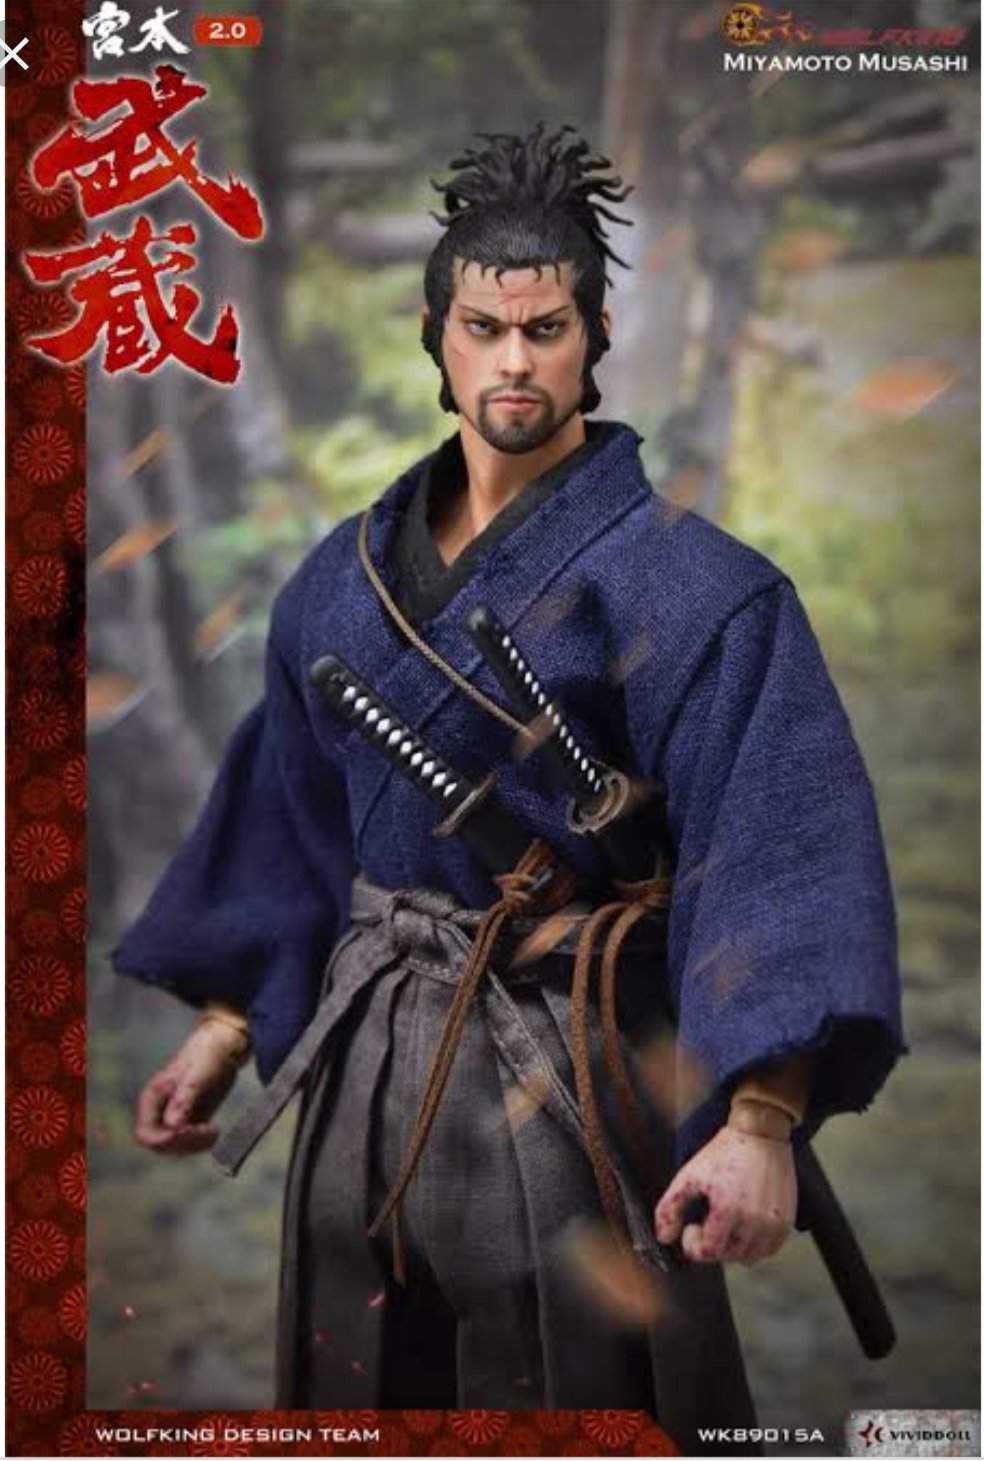 Miyamoto Musashi Wiki Fate Series Amino Oficial Amino - Gambaran